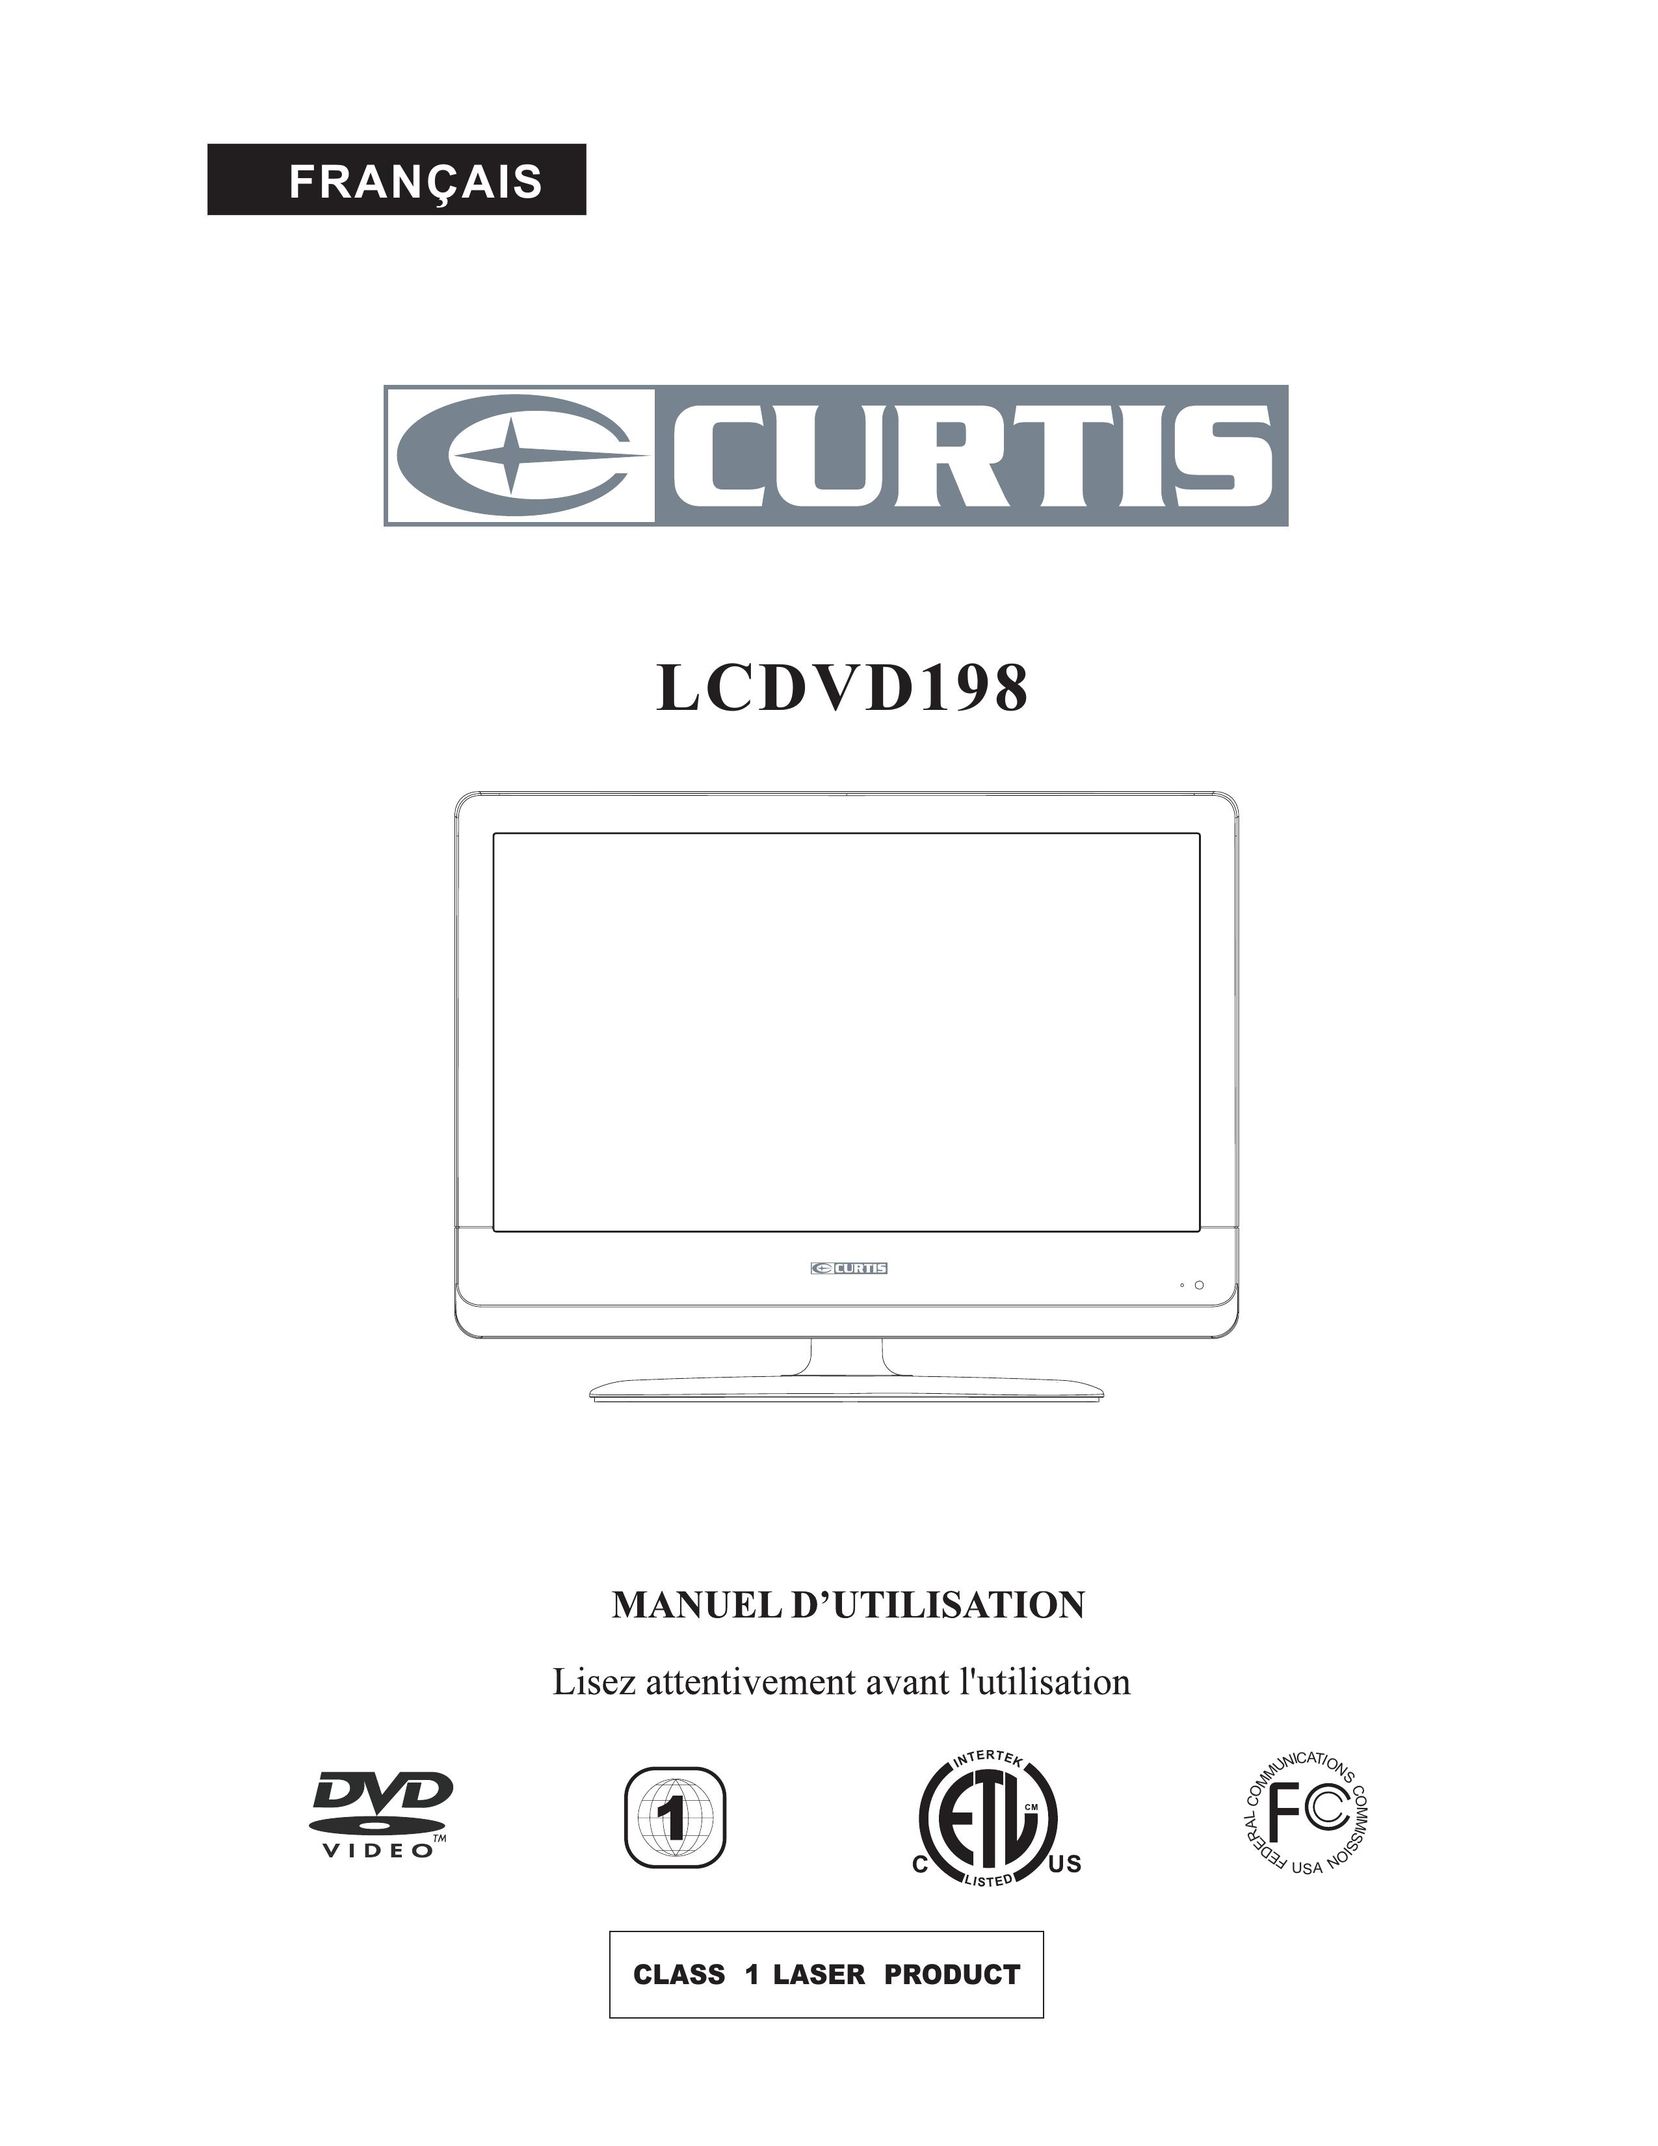 Curtis LCDVD198 Flat Panel Television User Manual